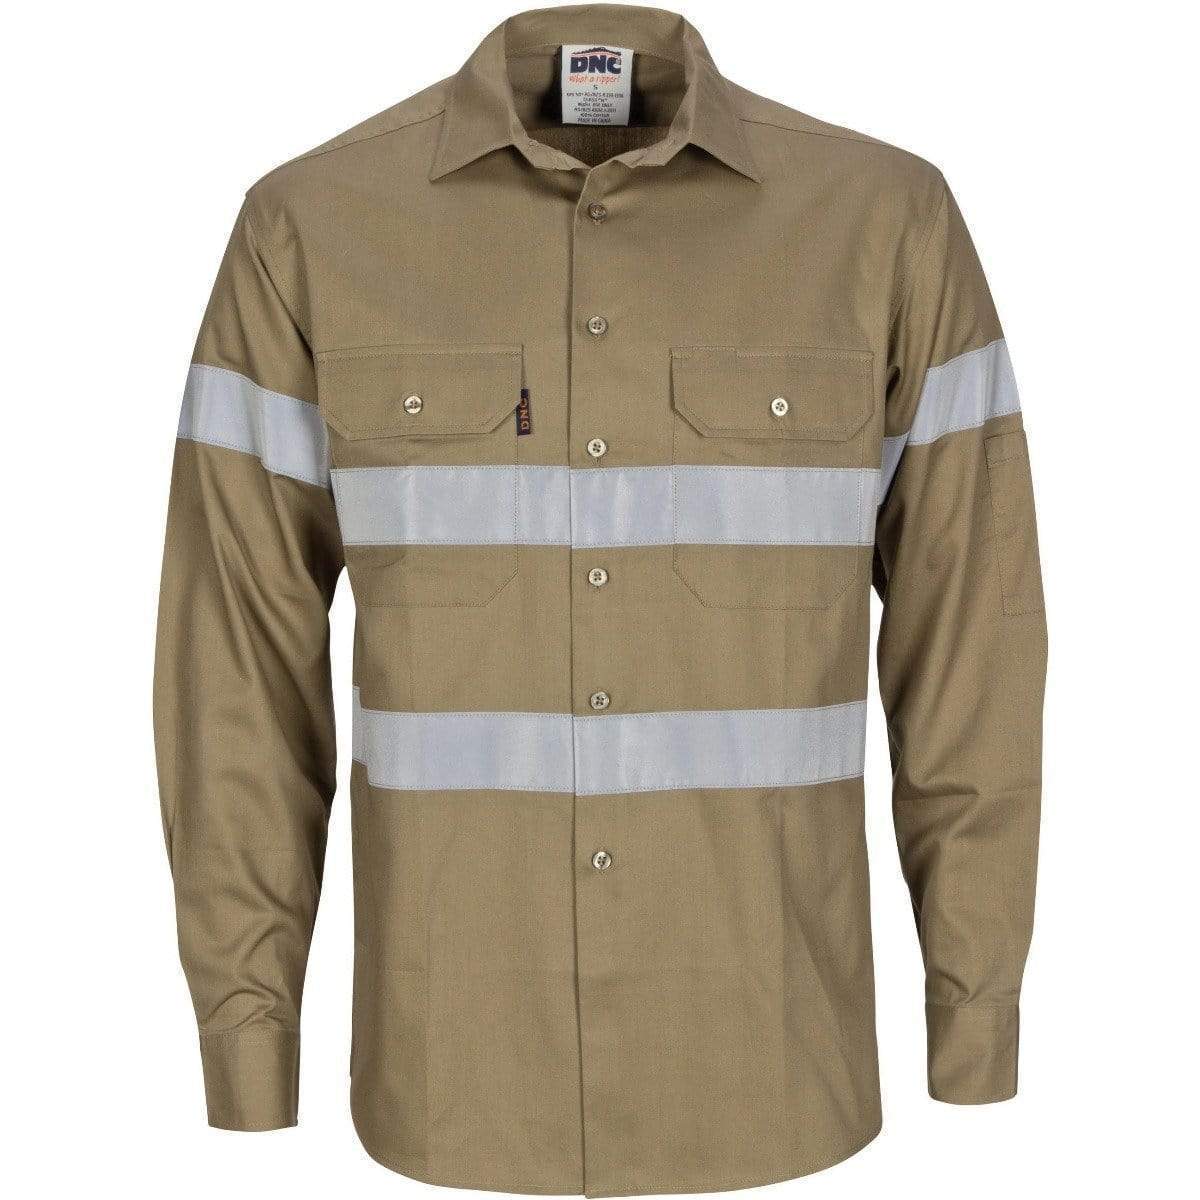 DNC Workwear Work Wear Khaki / XS DNC WORKWEAR Hi-Vis Cool-Breeze Long Sleeve Cotton Shirt with Generic Reflective Tape 3967